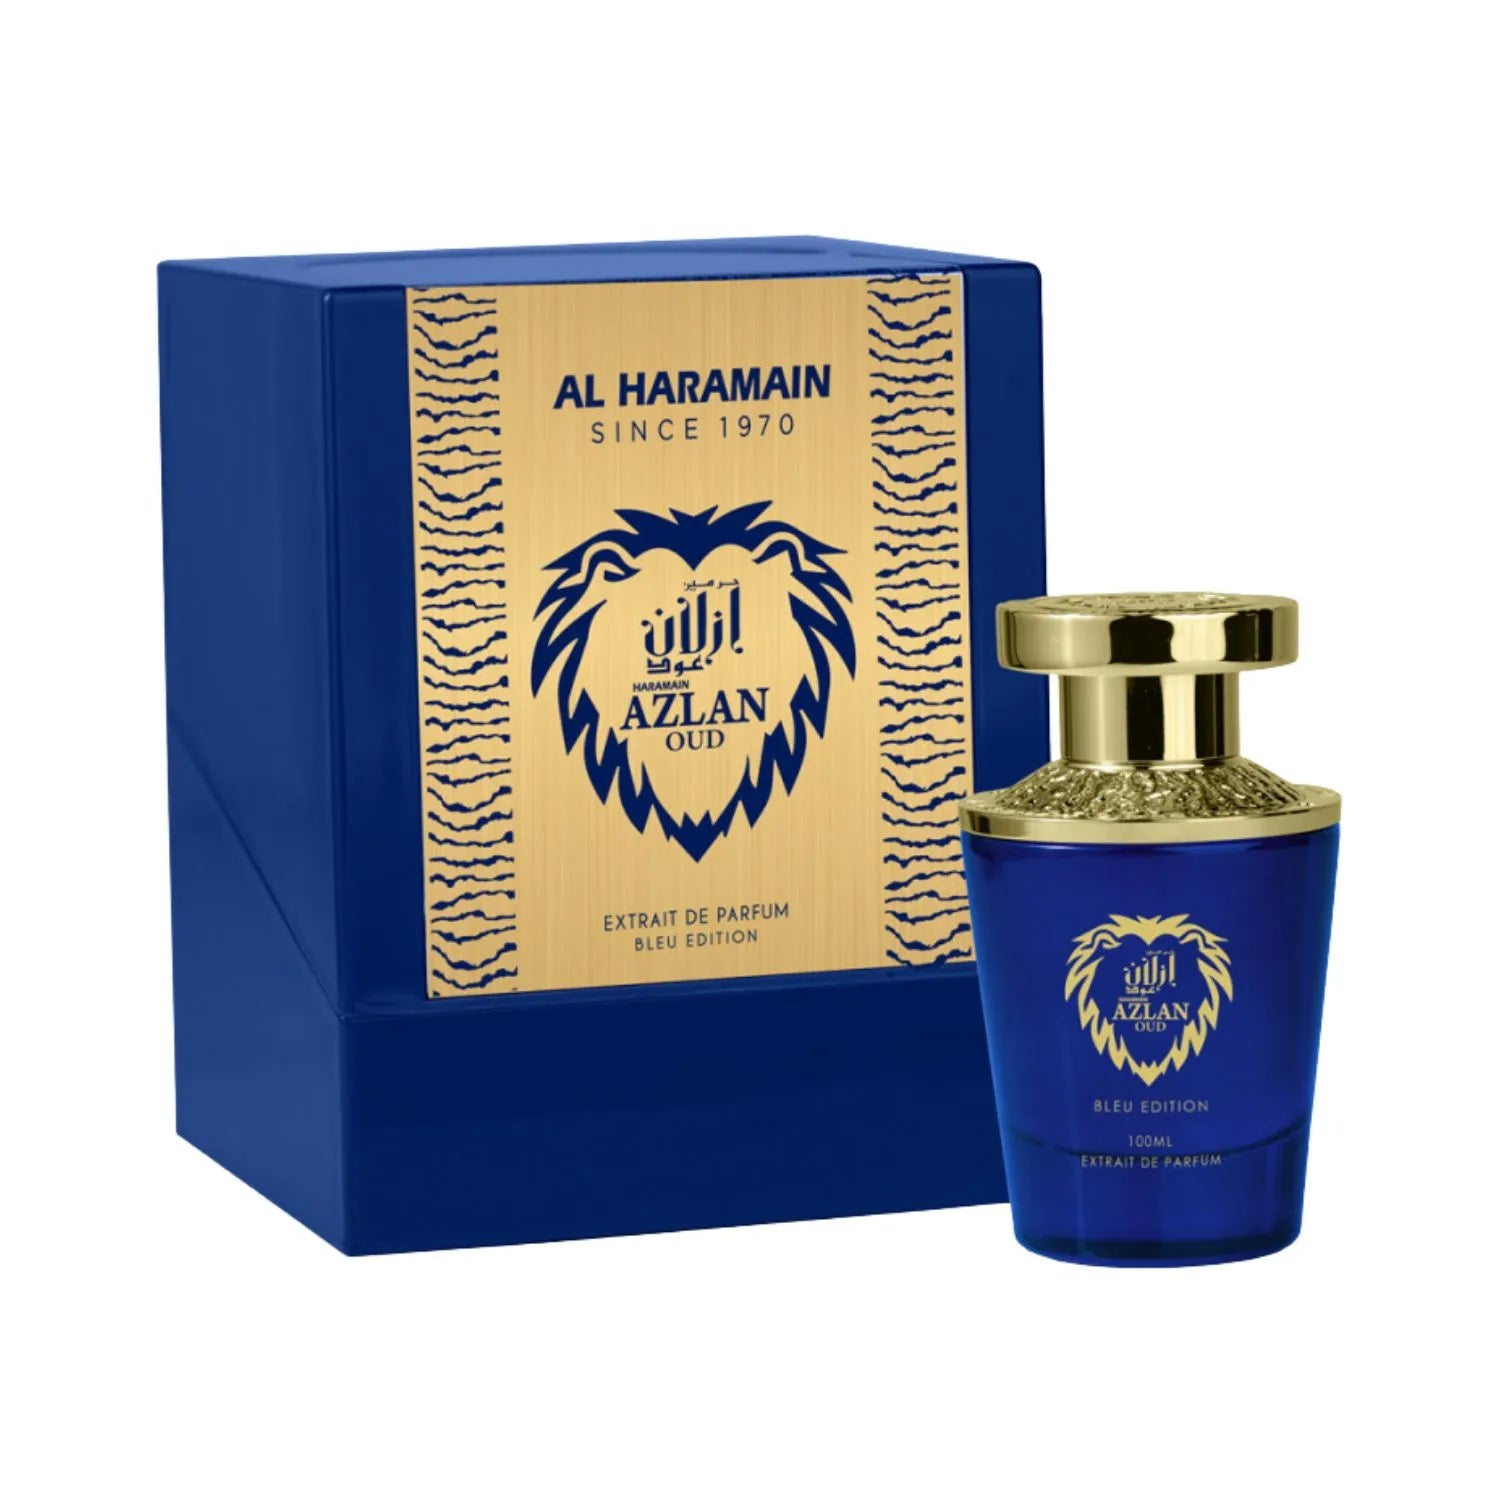 Azlan Oud Bleu Edition Perfume Package